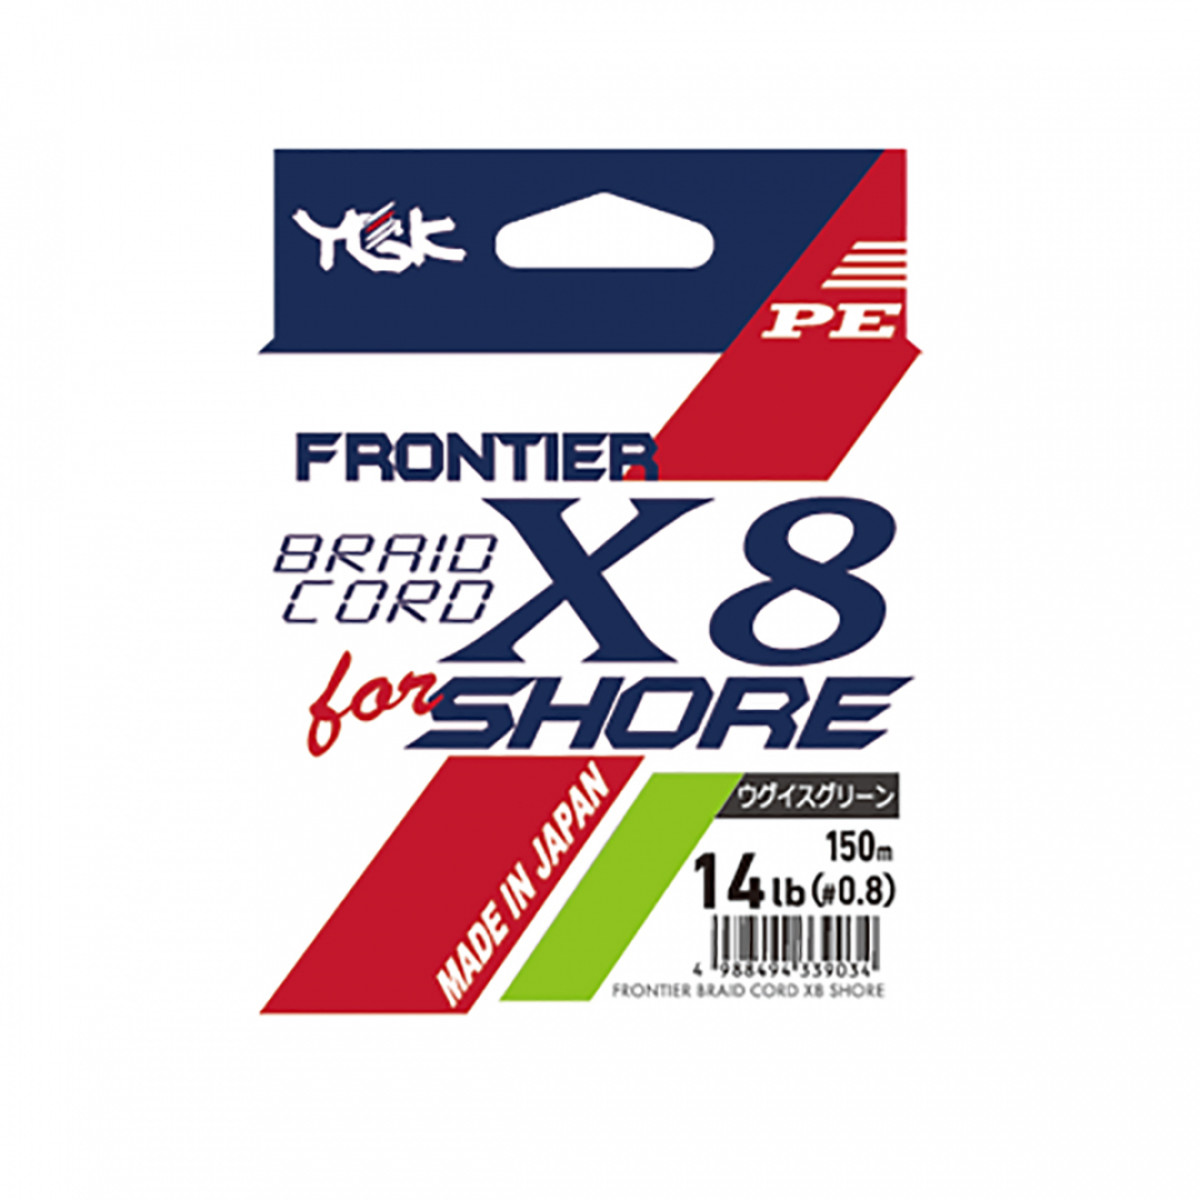 YGK FRONTIER BRAID CORD X8 150M